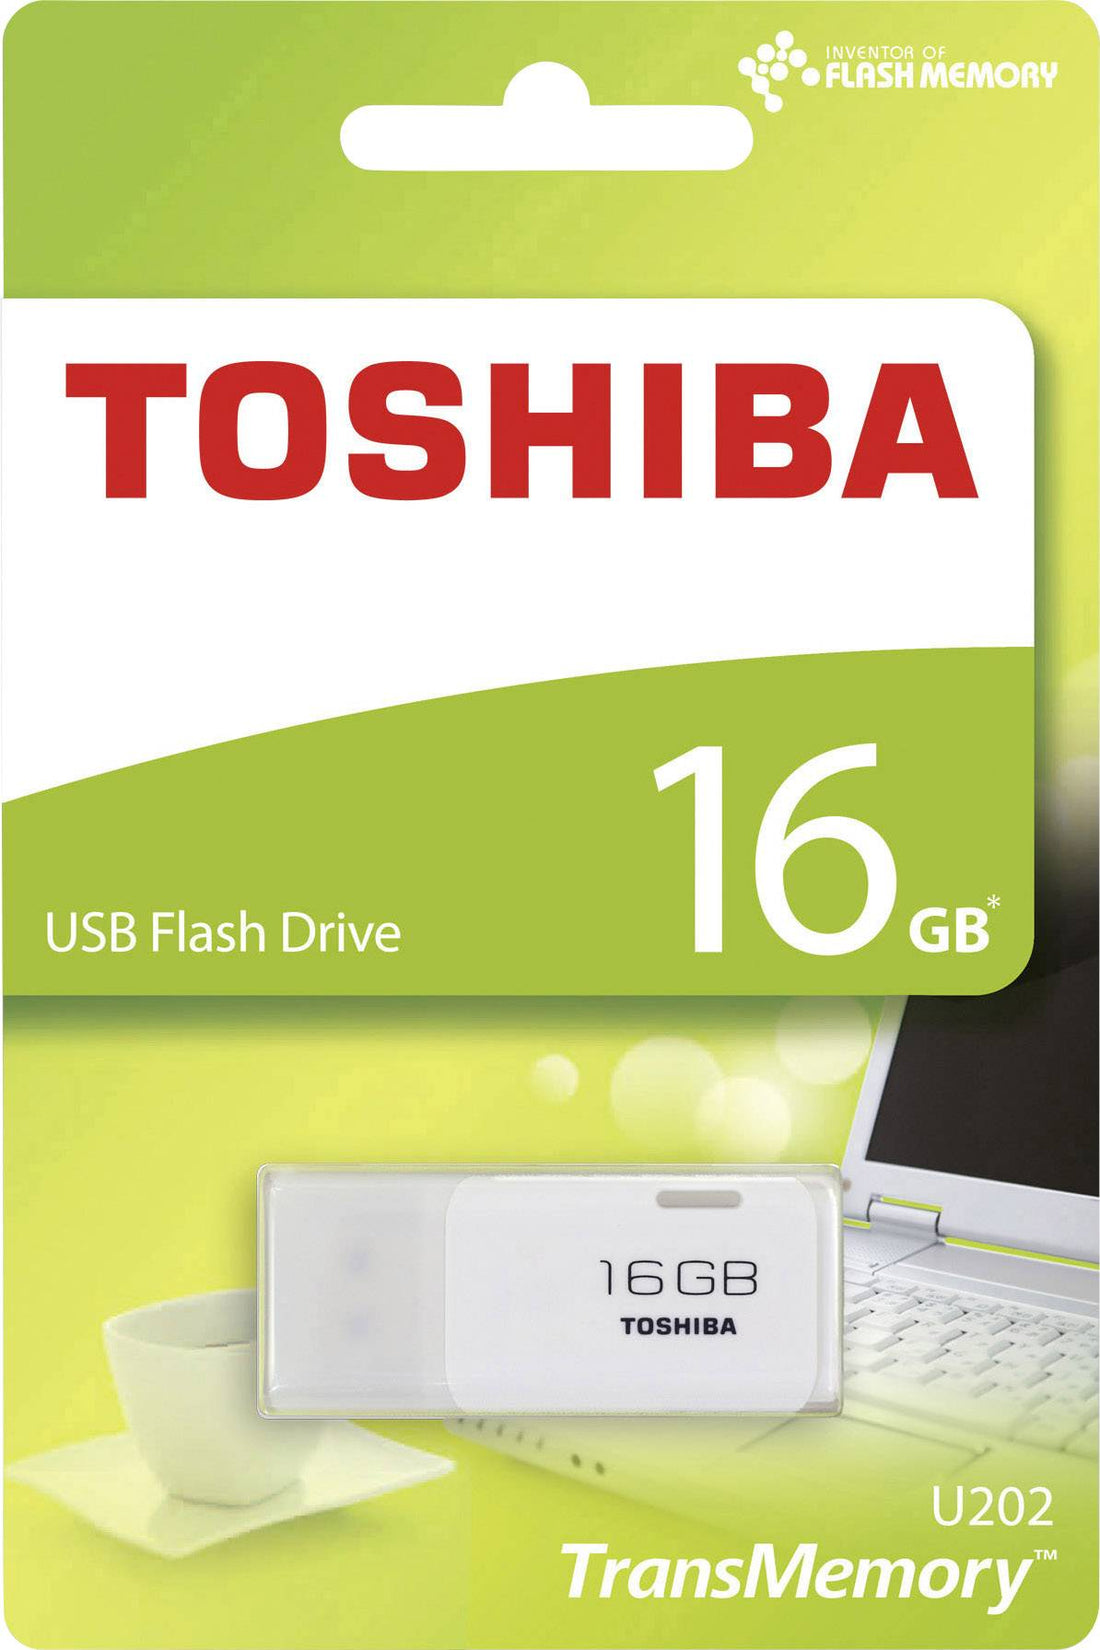 Toshiba 16GB USB Flash Drive